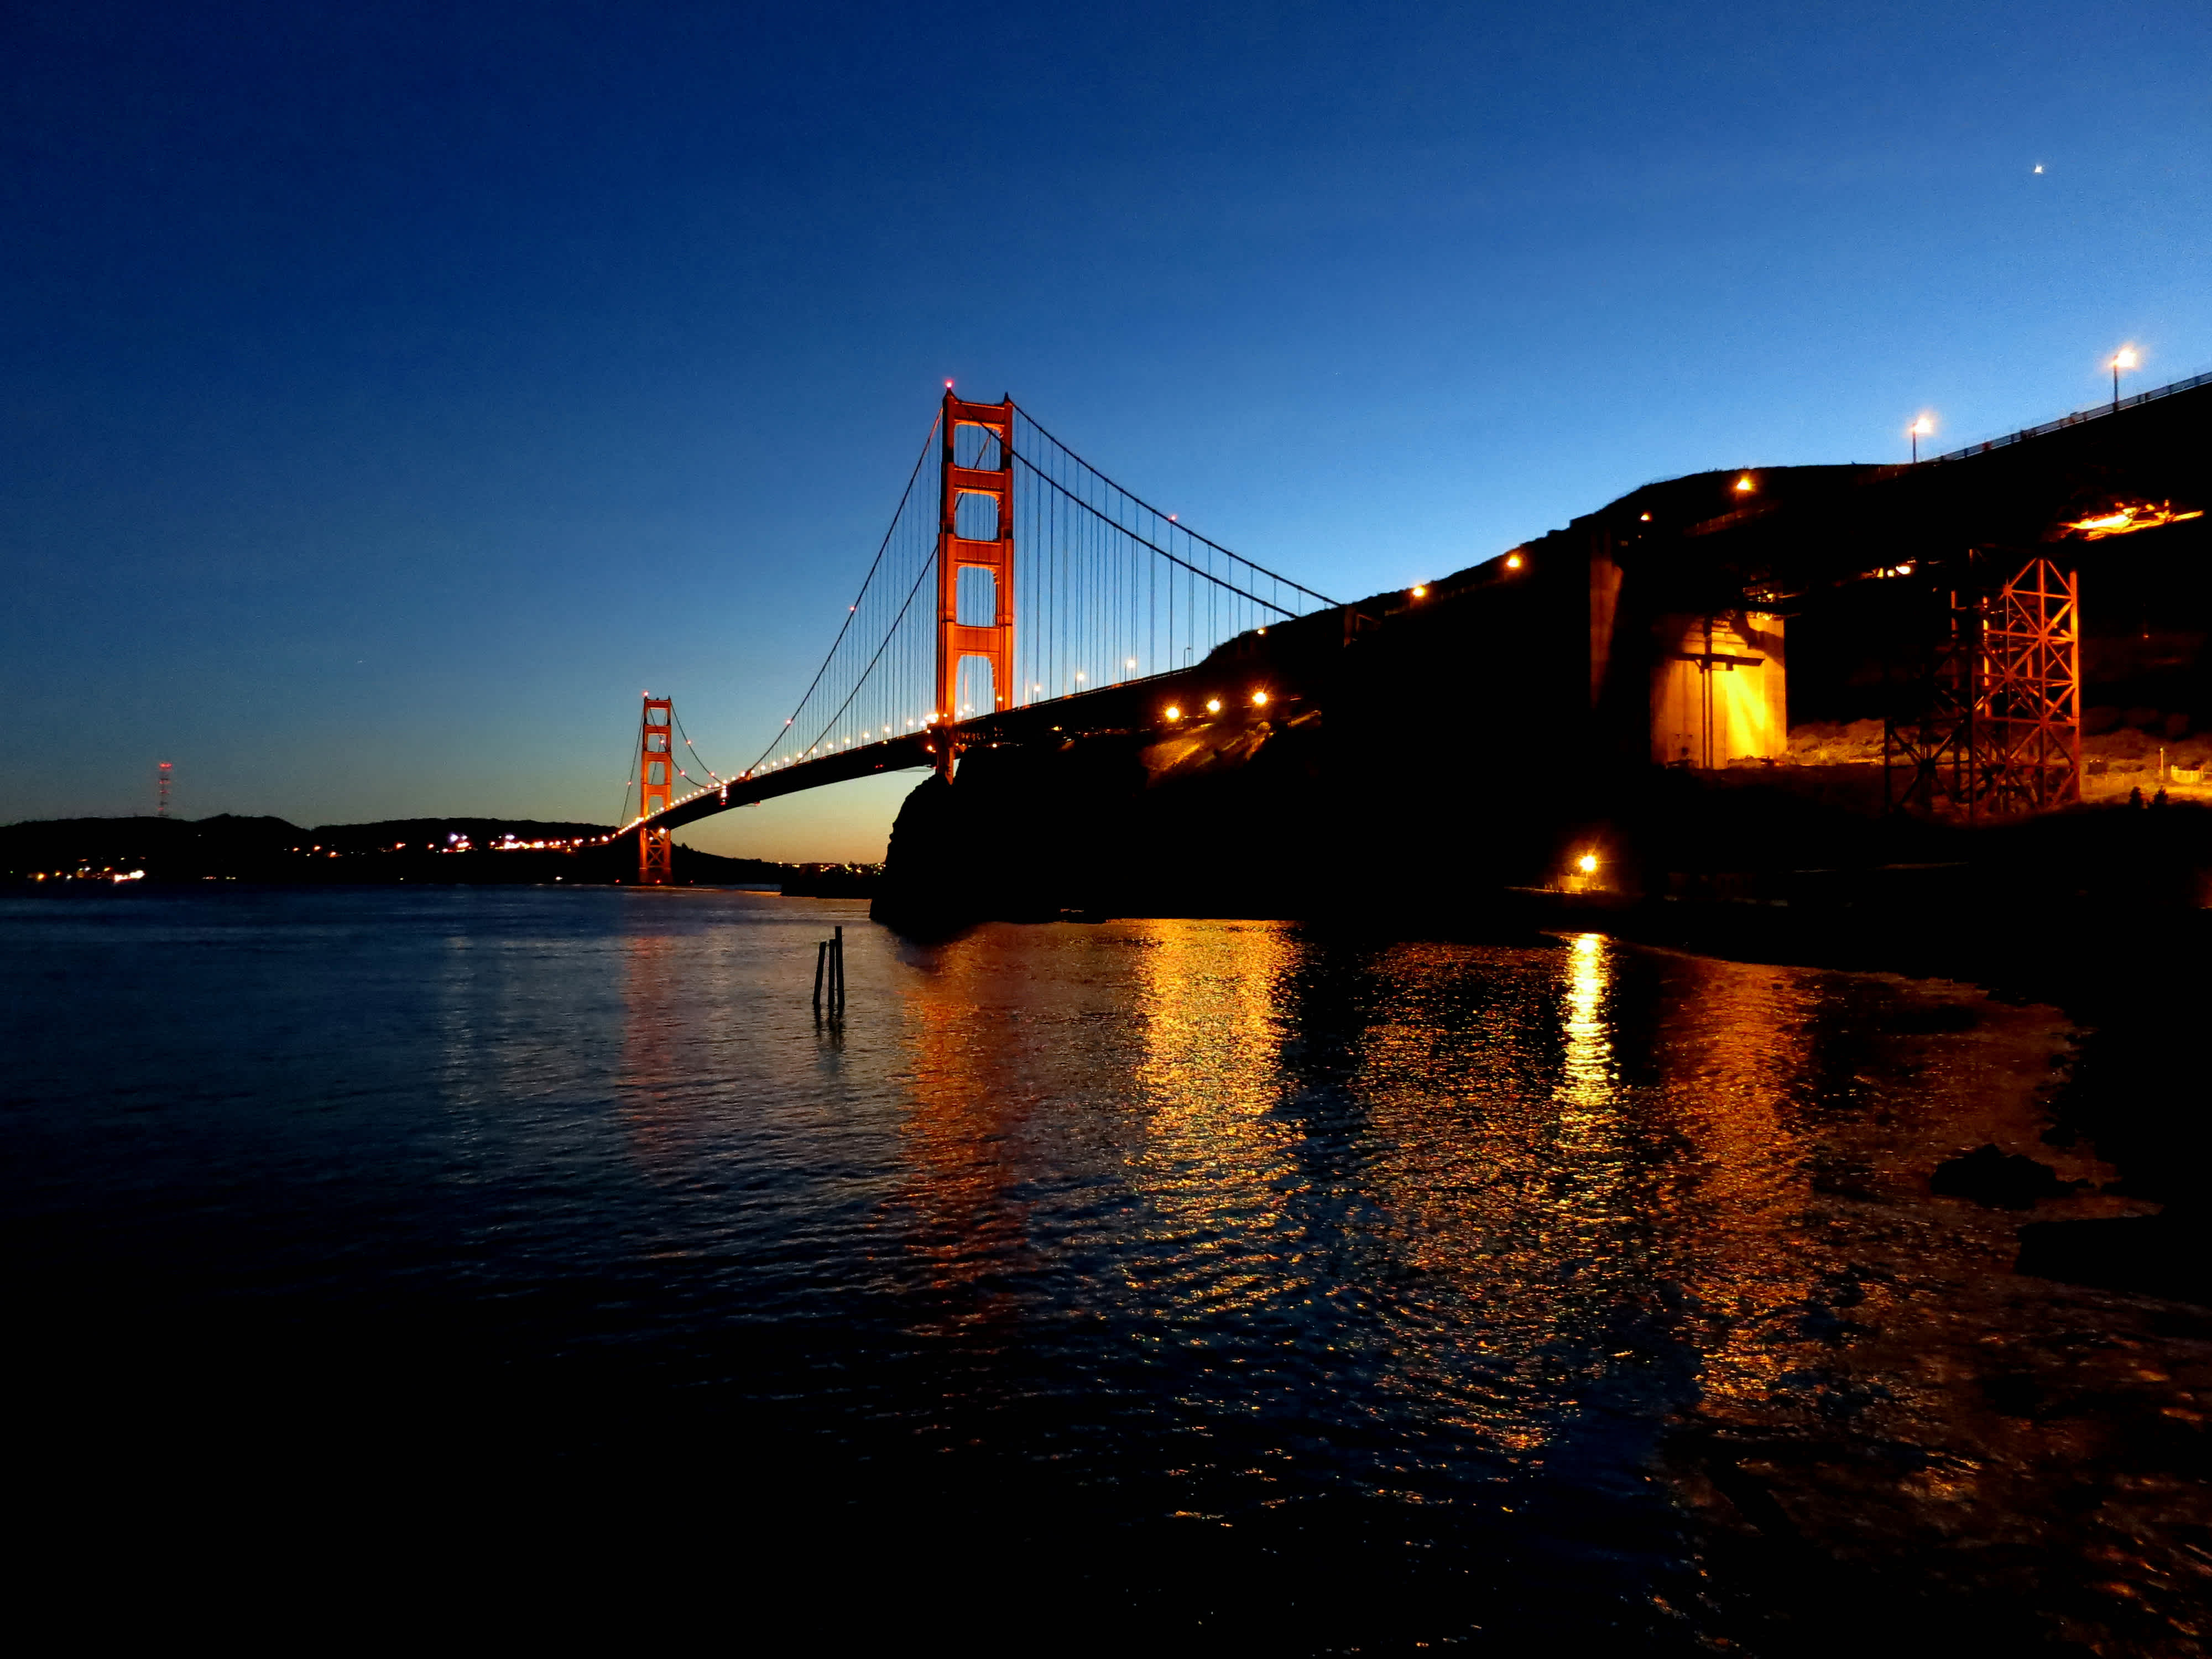 Golden Gate Bridge and nearby city in the sunset in Golden Gate Bridge, San Francisco, California.